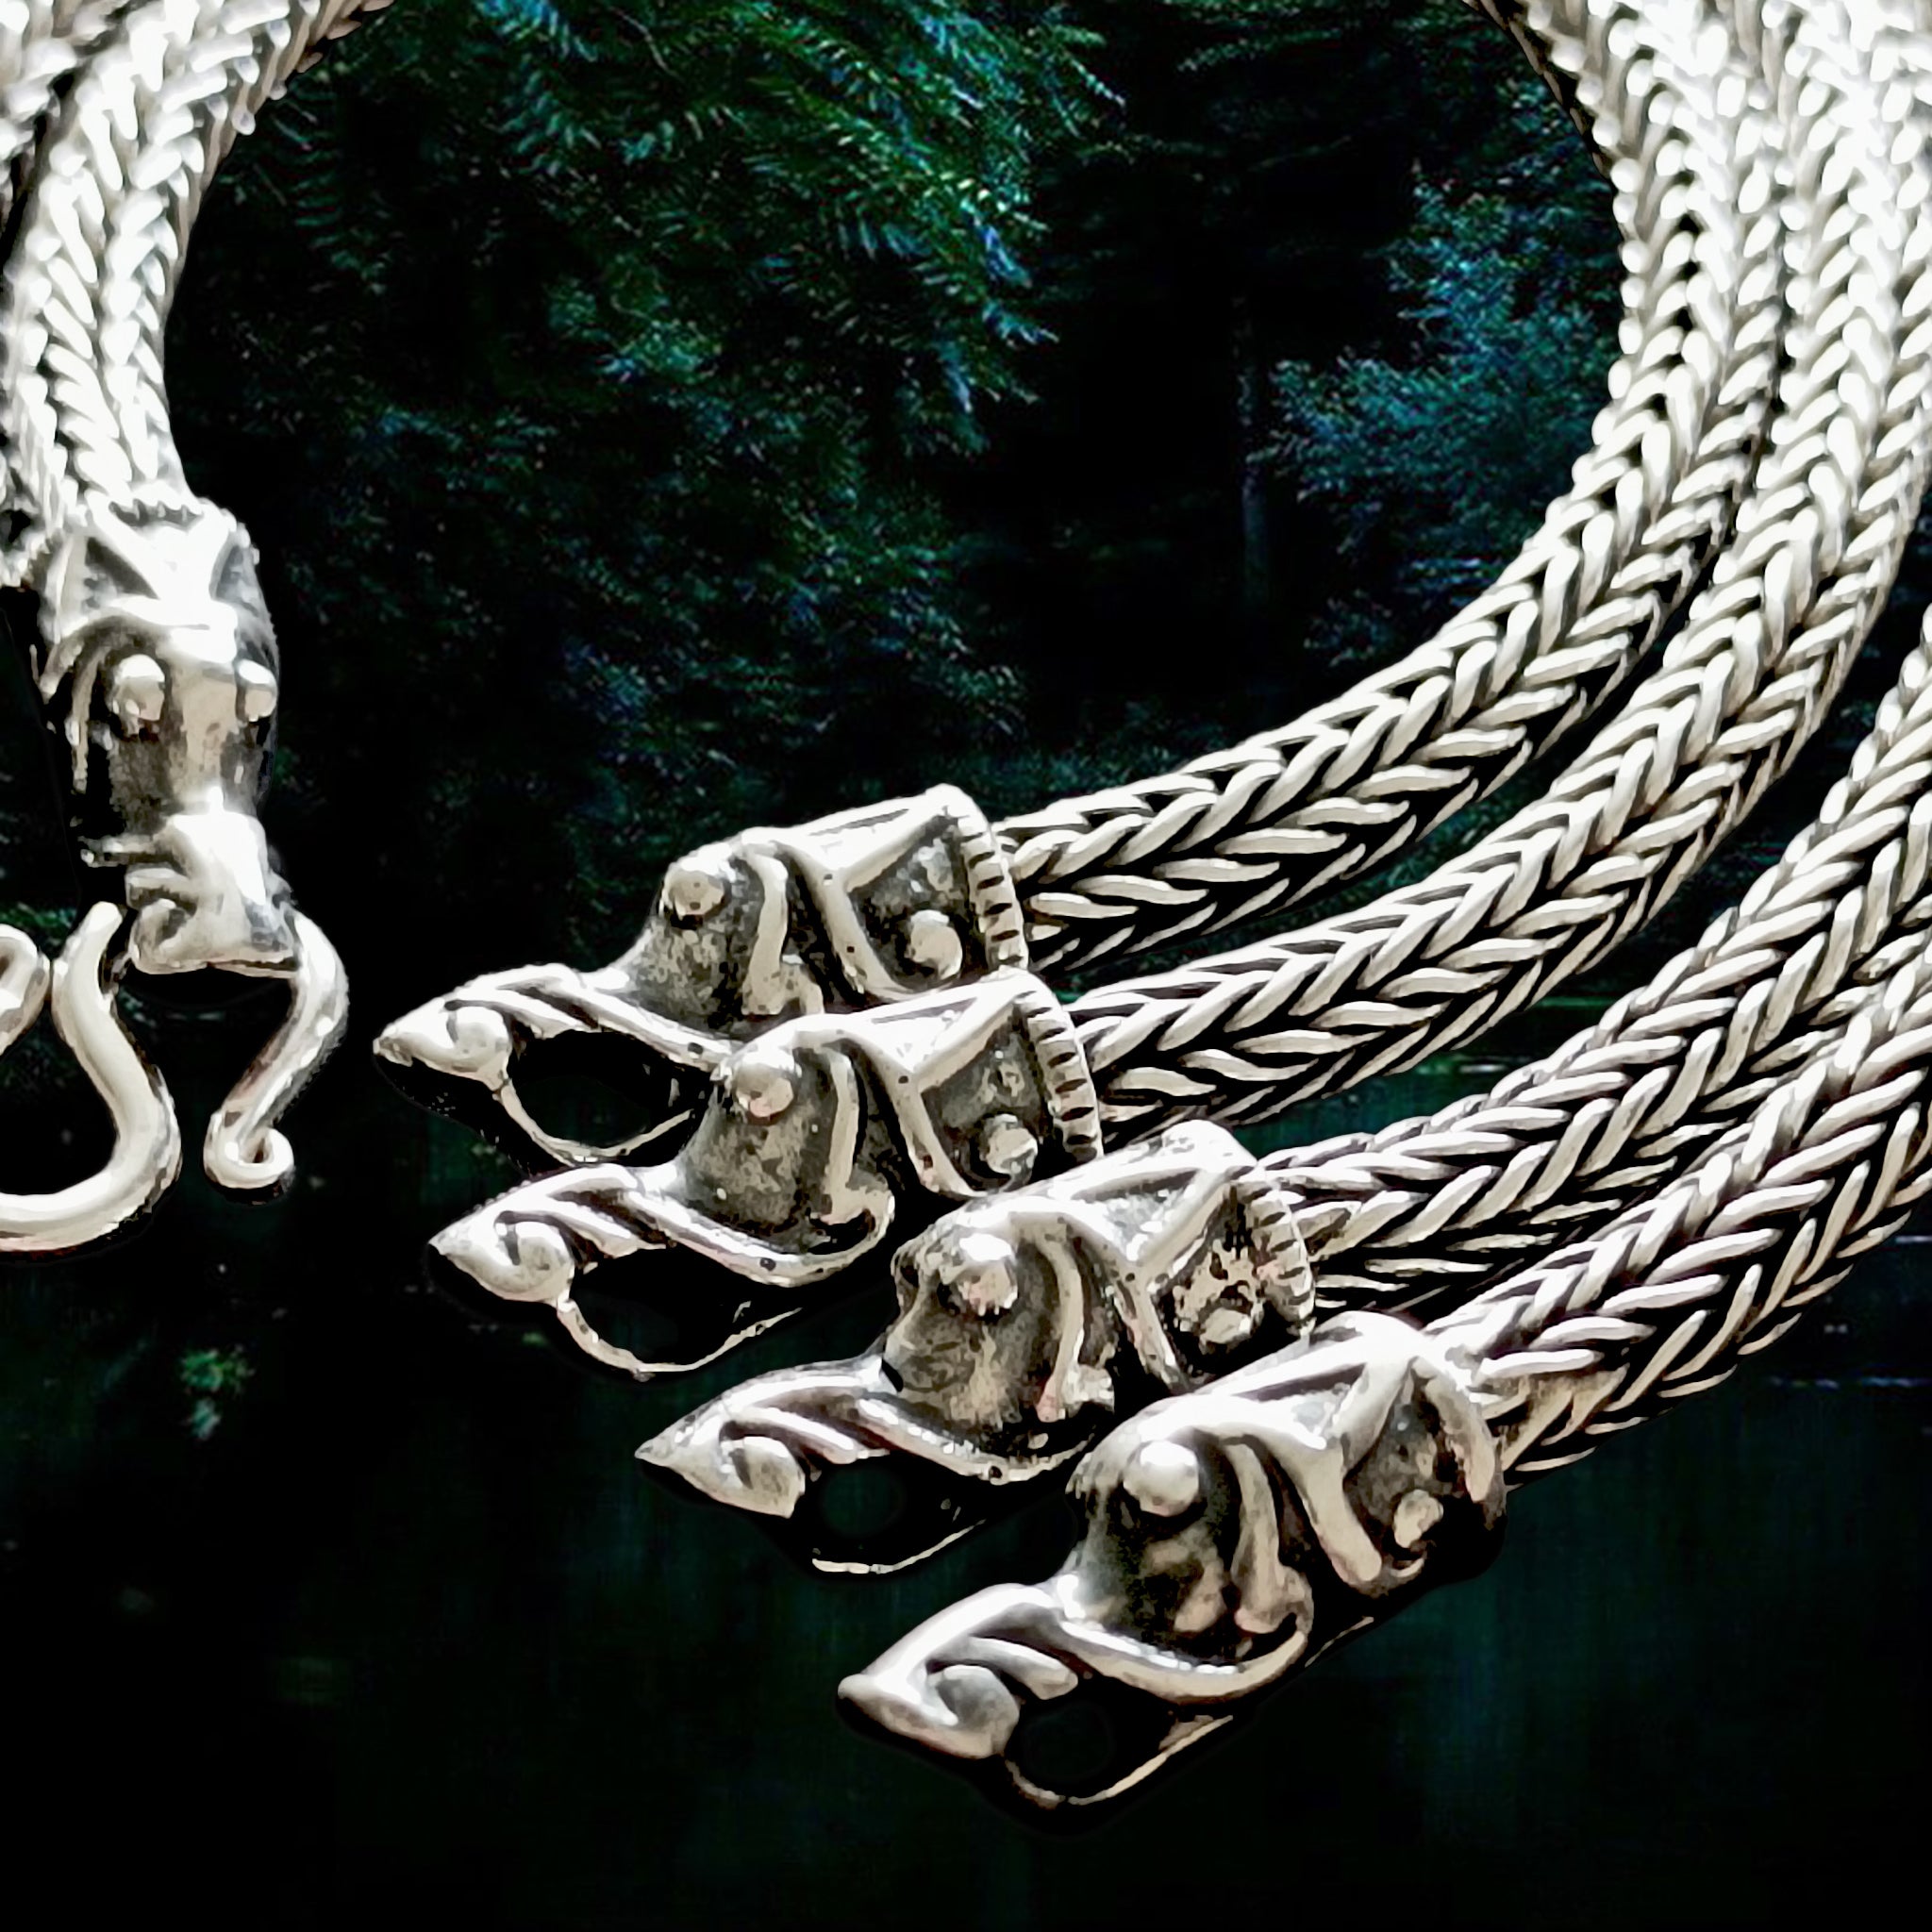 5mm Silver Snake Bracelets With Gotlandic Dragon Heads - Close Up